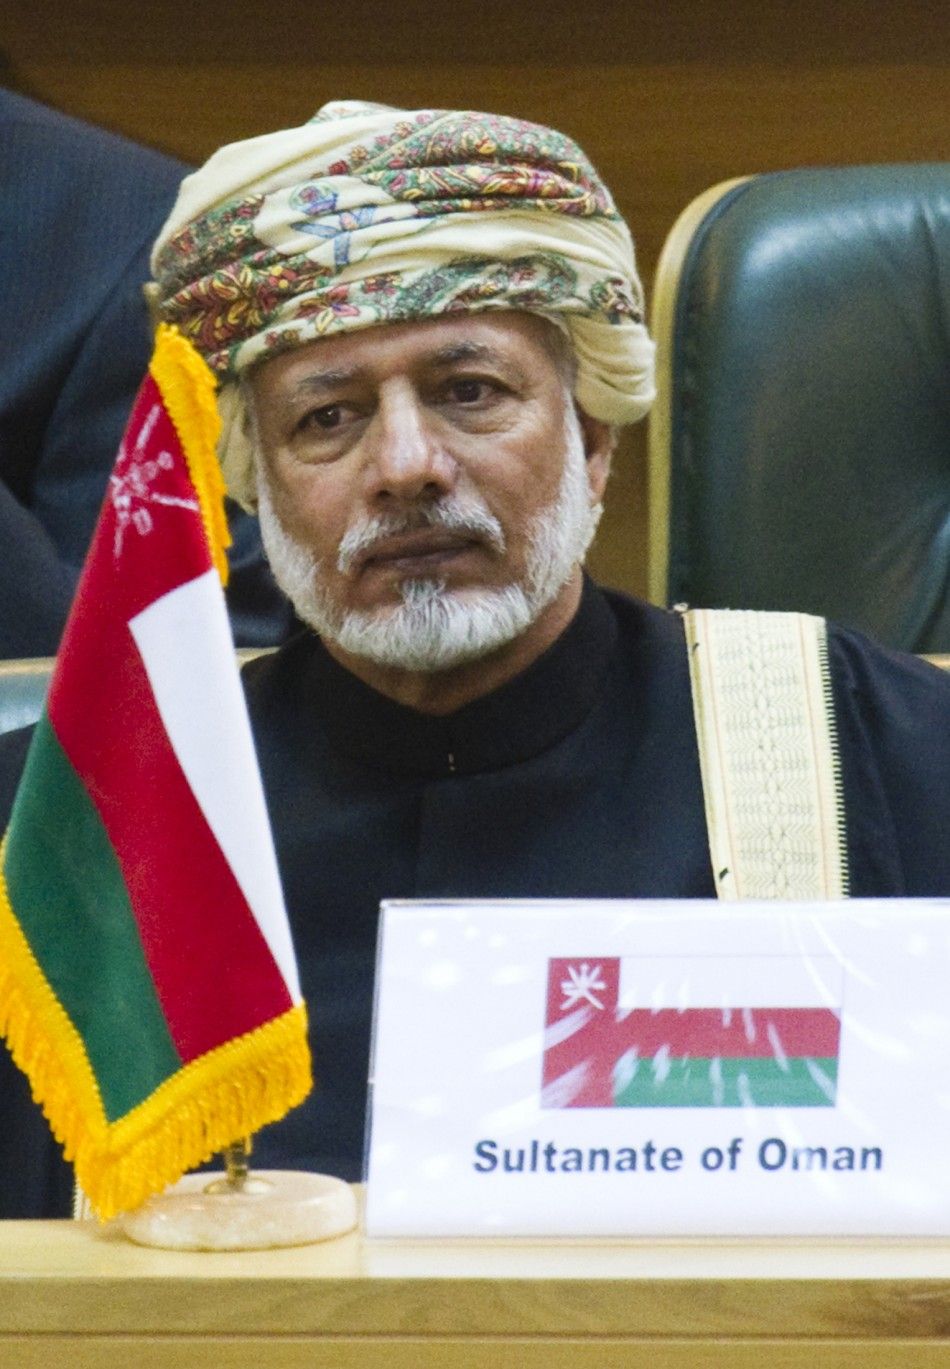 Omans Sultan Qaboos bin Said